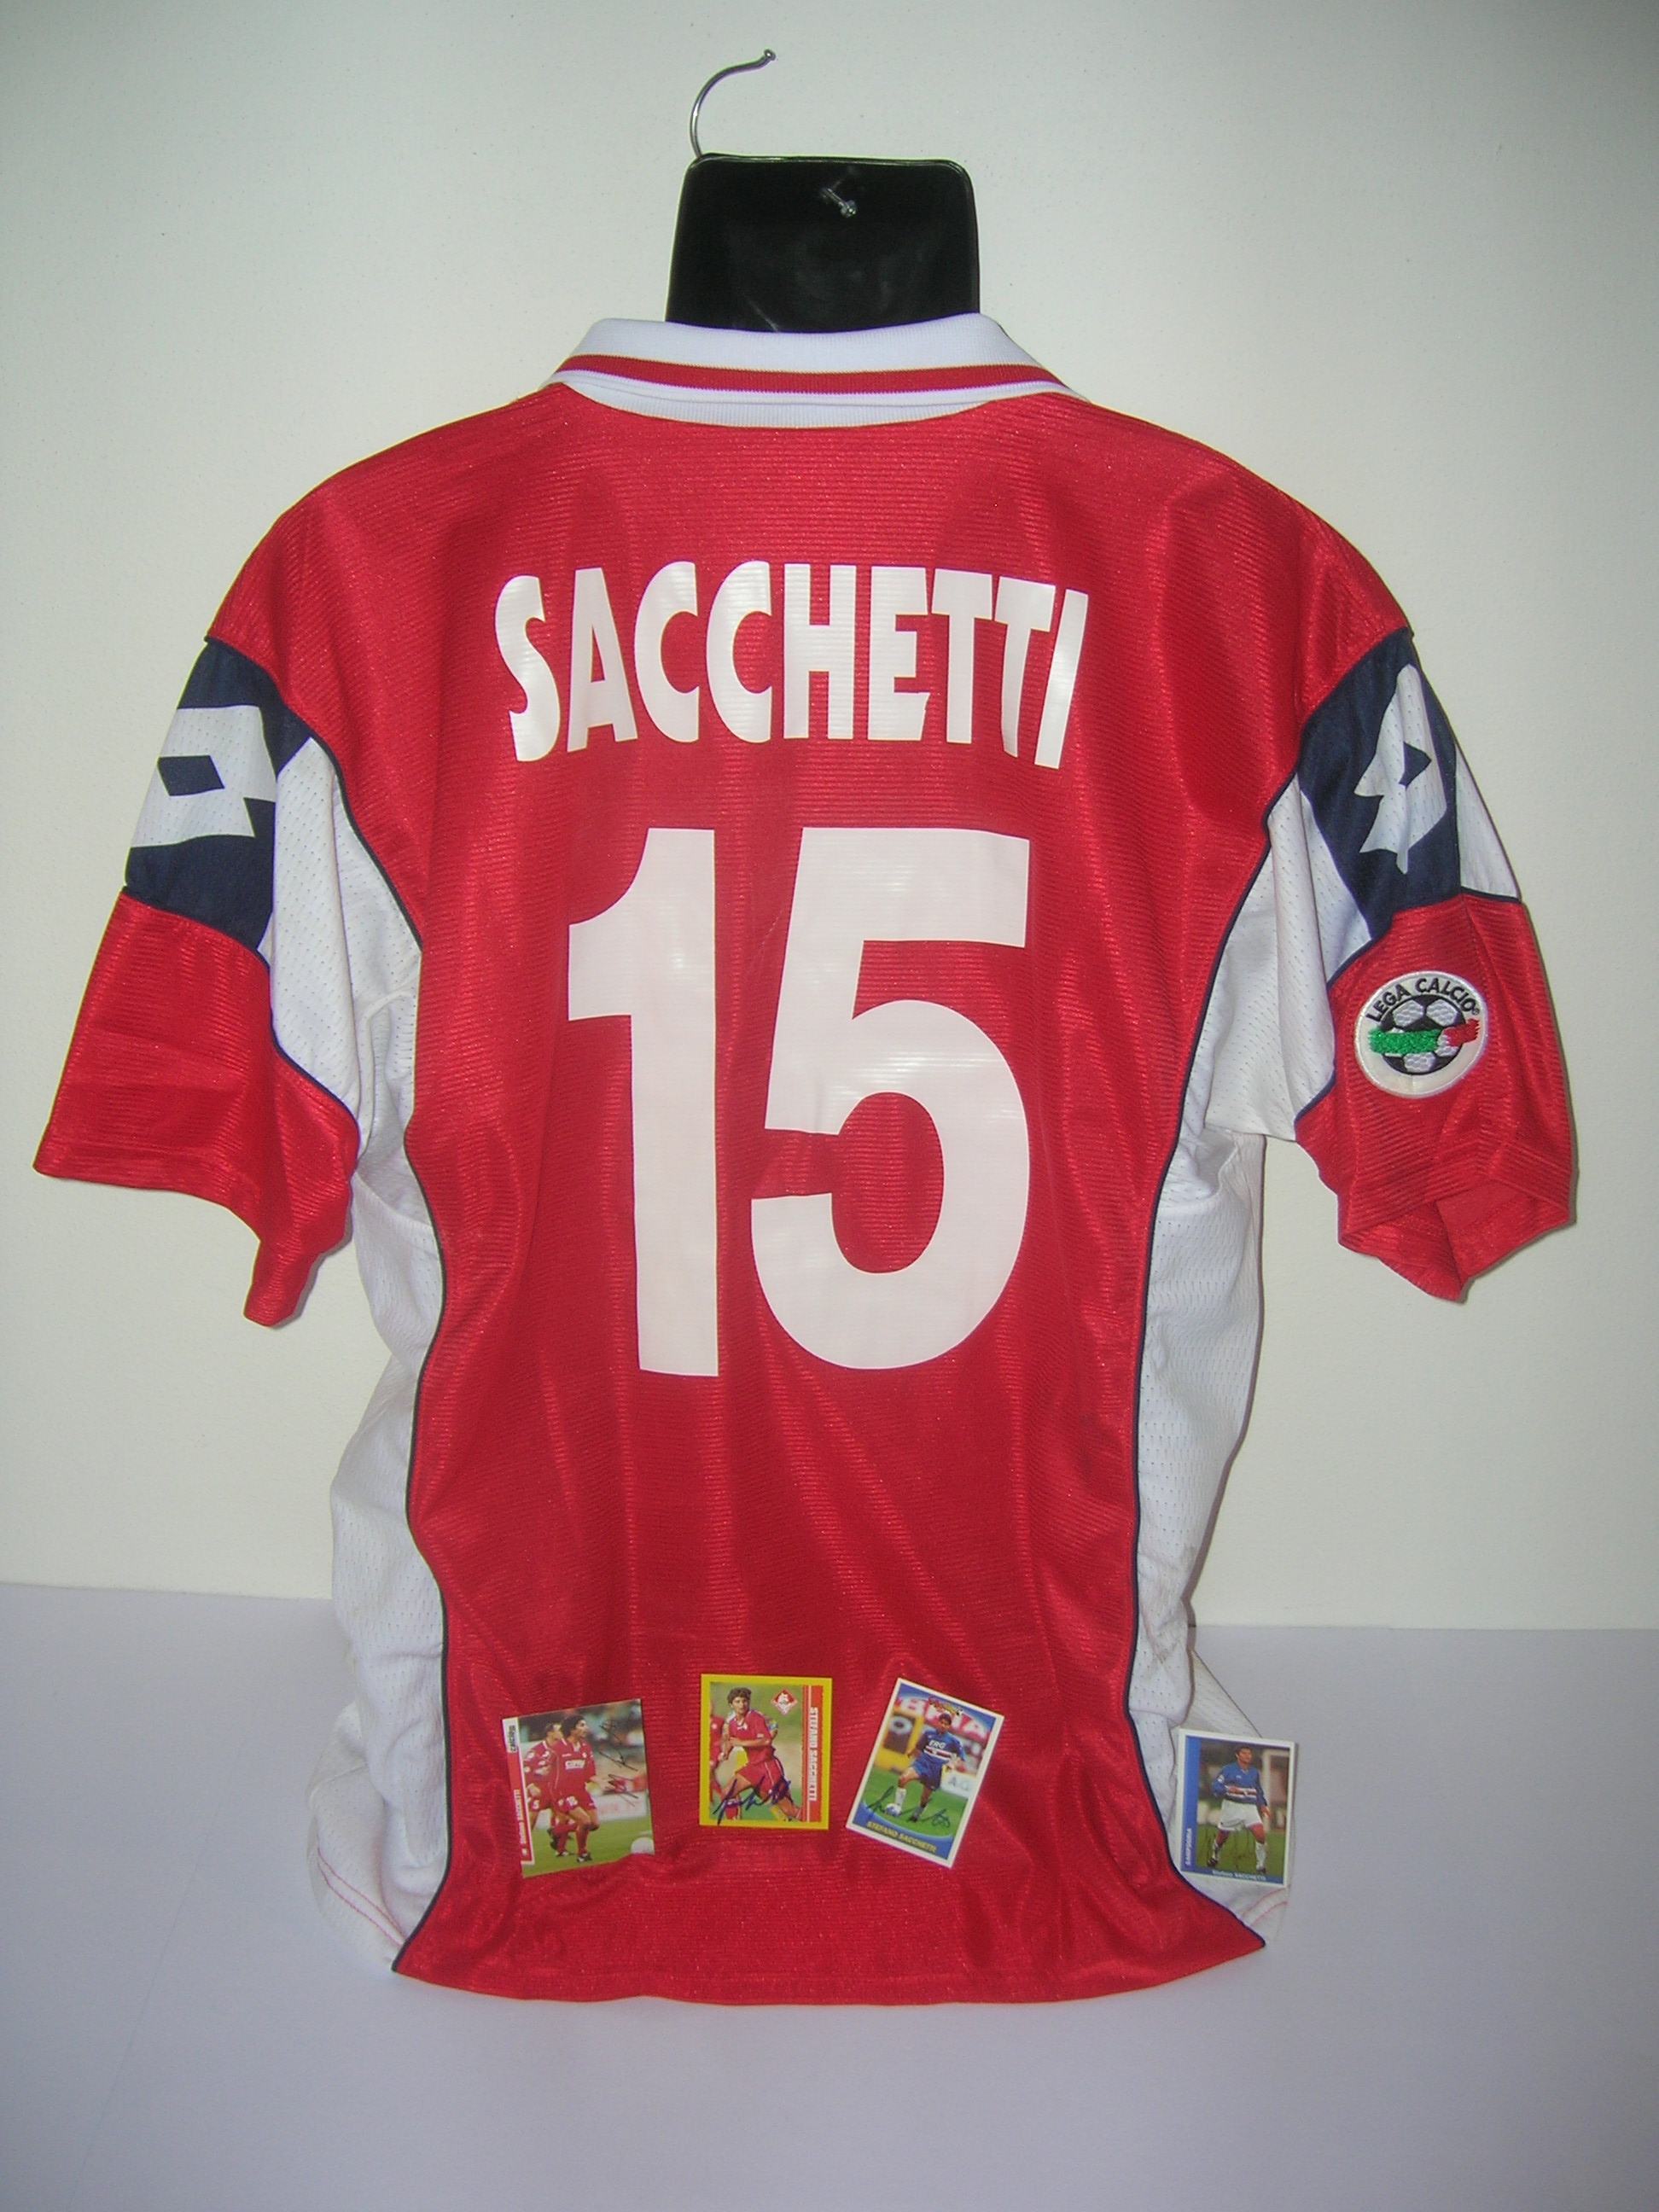 Sacchetti n.15 Piacenza B